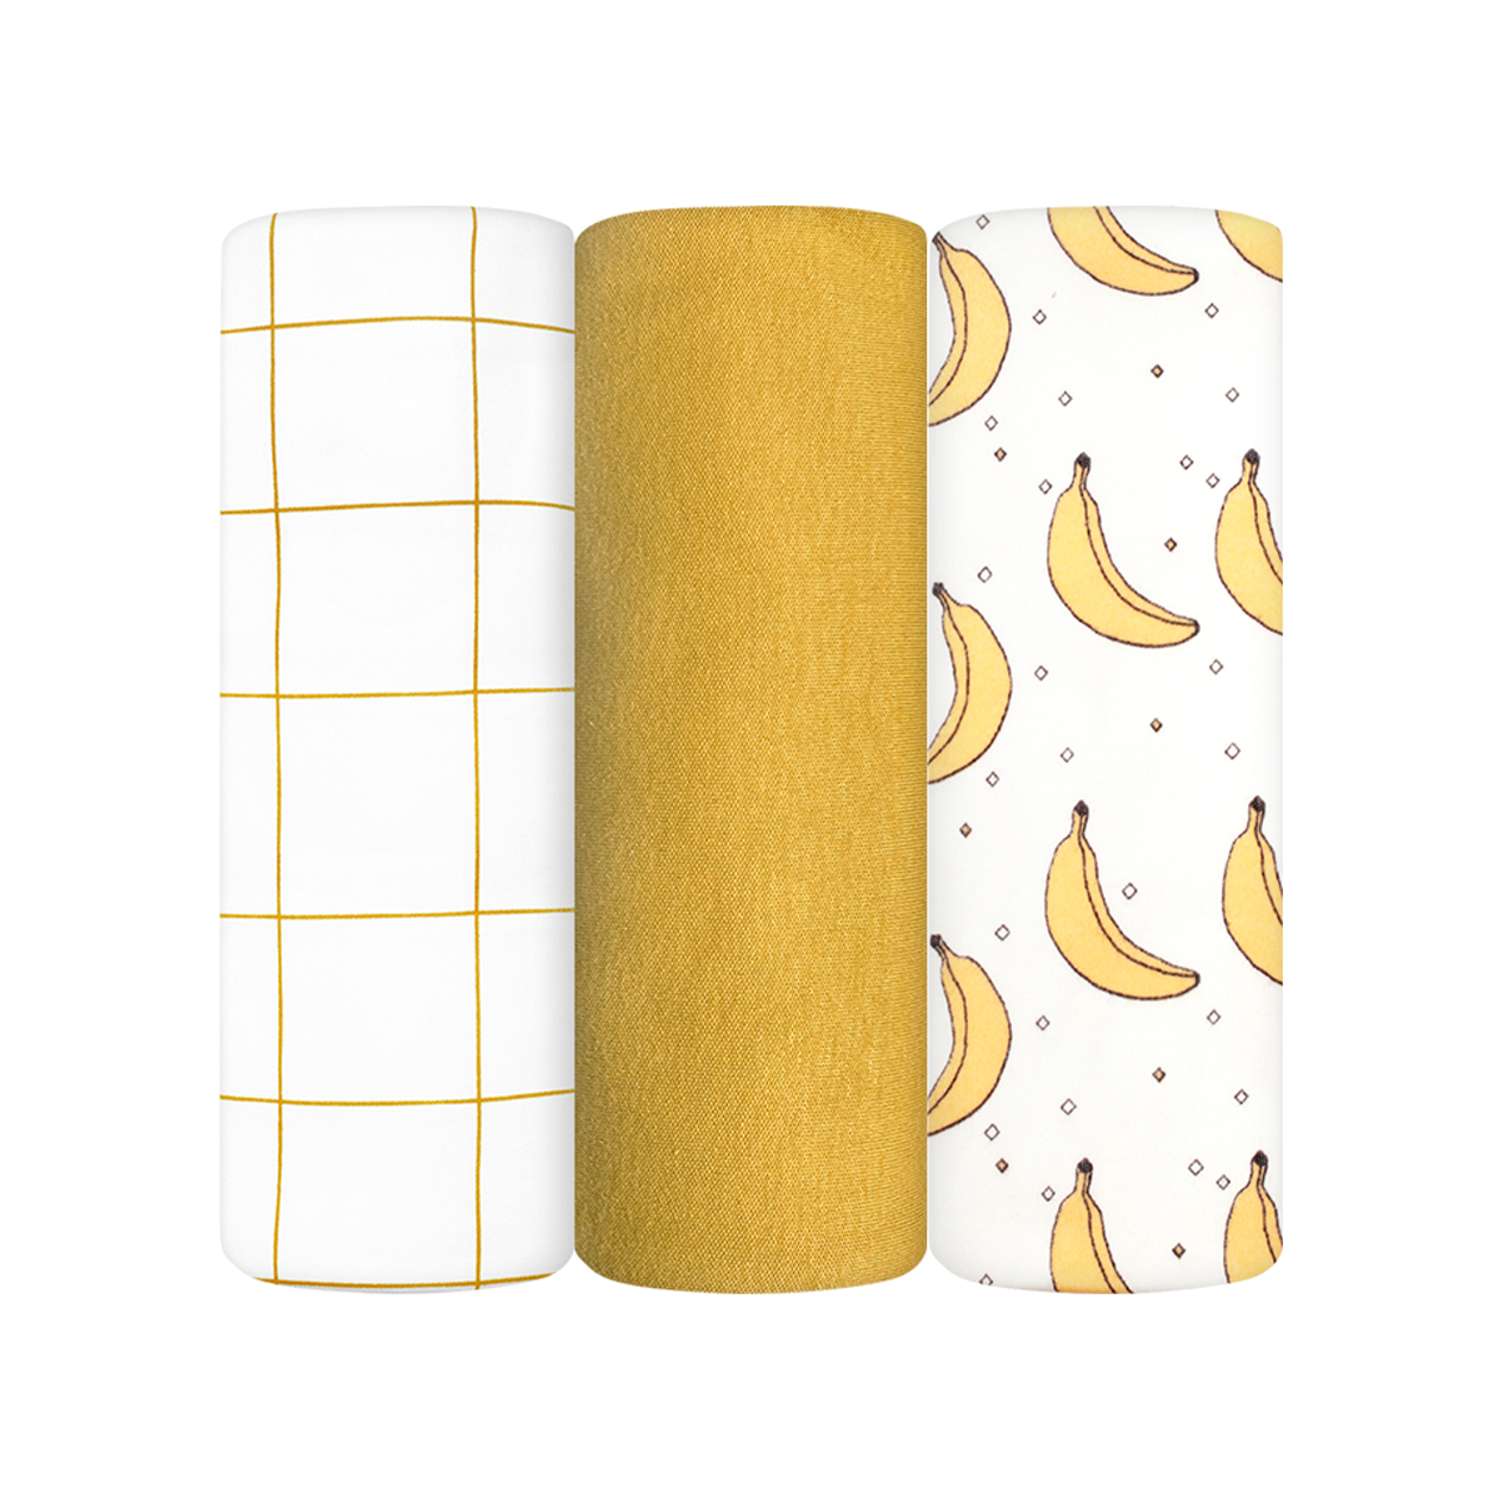 Комплект пелёнок Mjolk Бананы/Mustard/Клетка сет из 3х штук 80*80 - фото 1